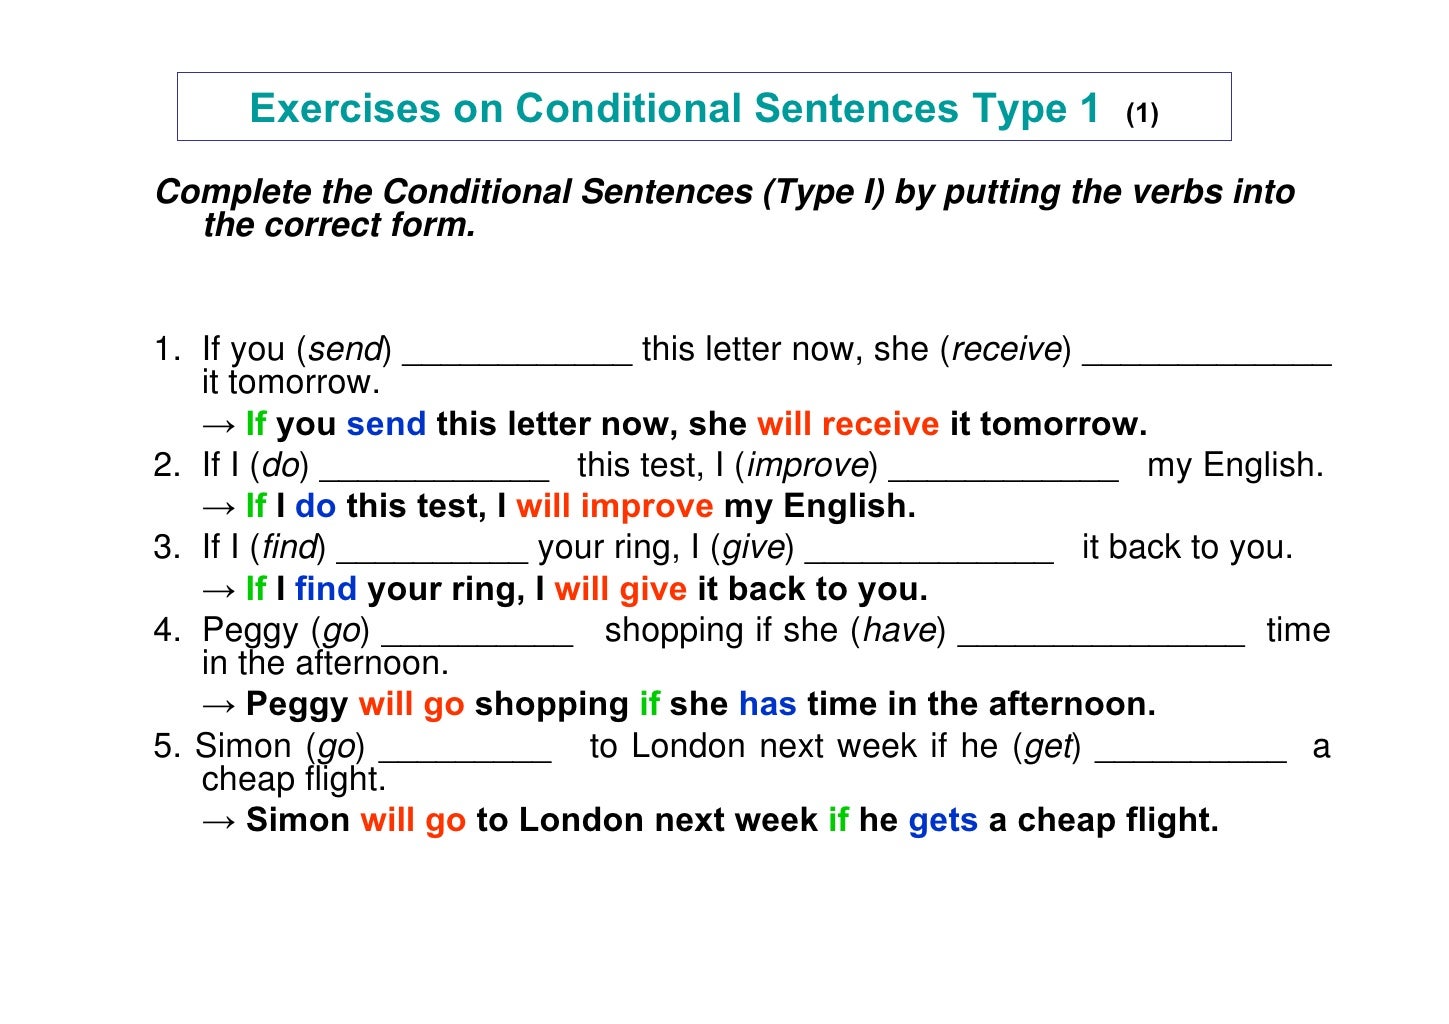 This letter write now. Conditionals в английском exercises. Типы условных предложений в английском языке упражнения. Условные предложения (conditional sentences). Условные предложения в английском упражнения.